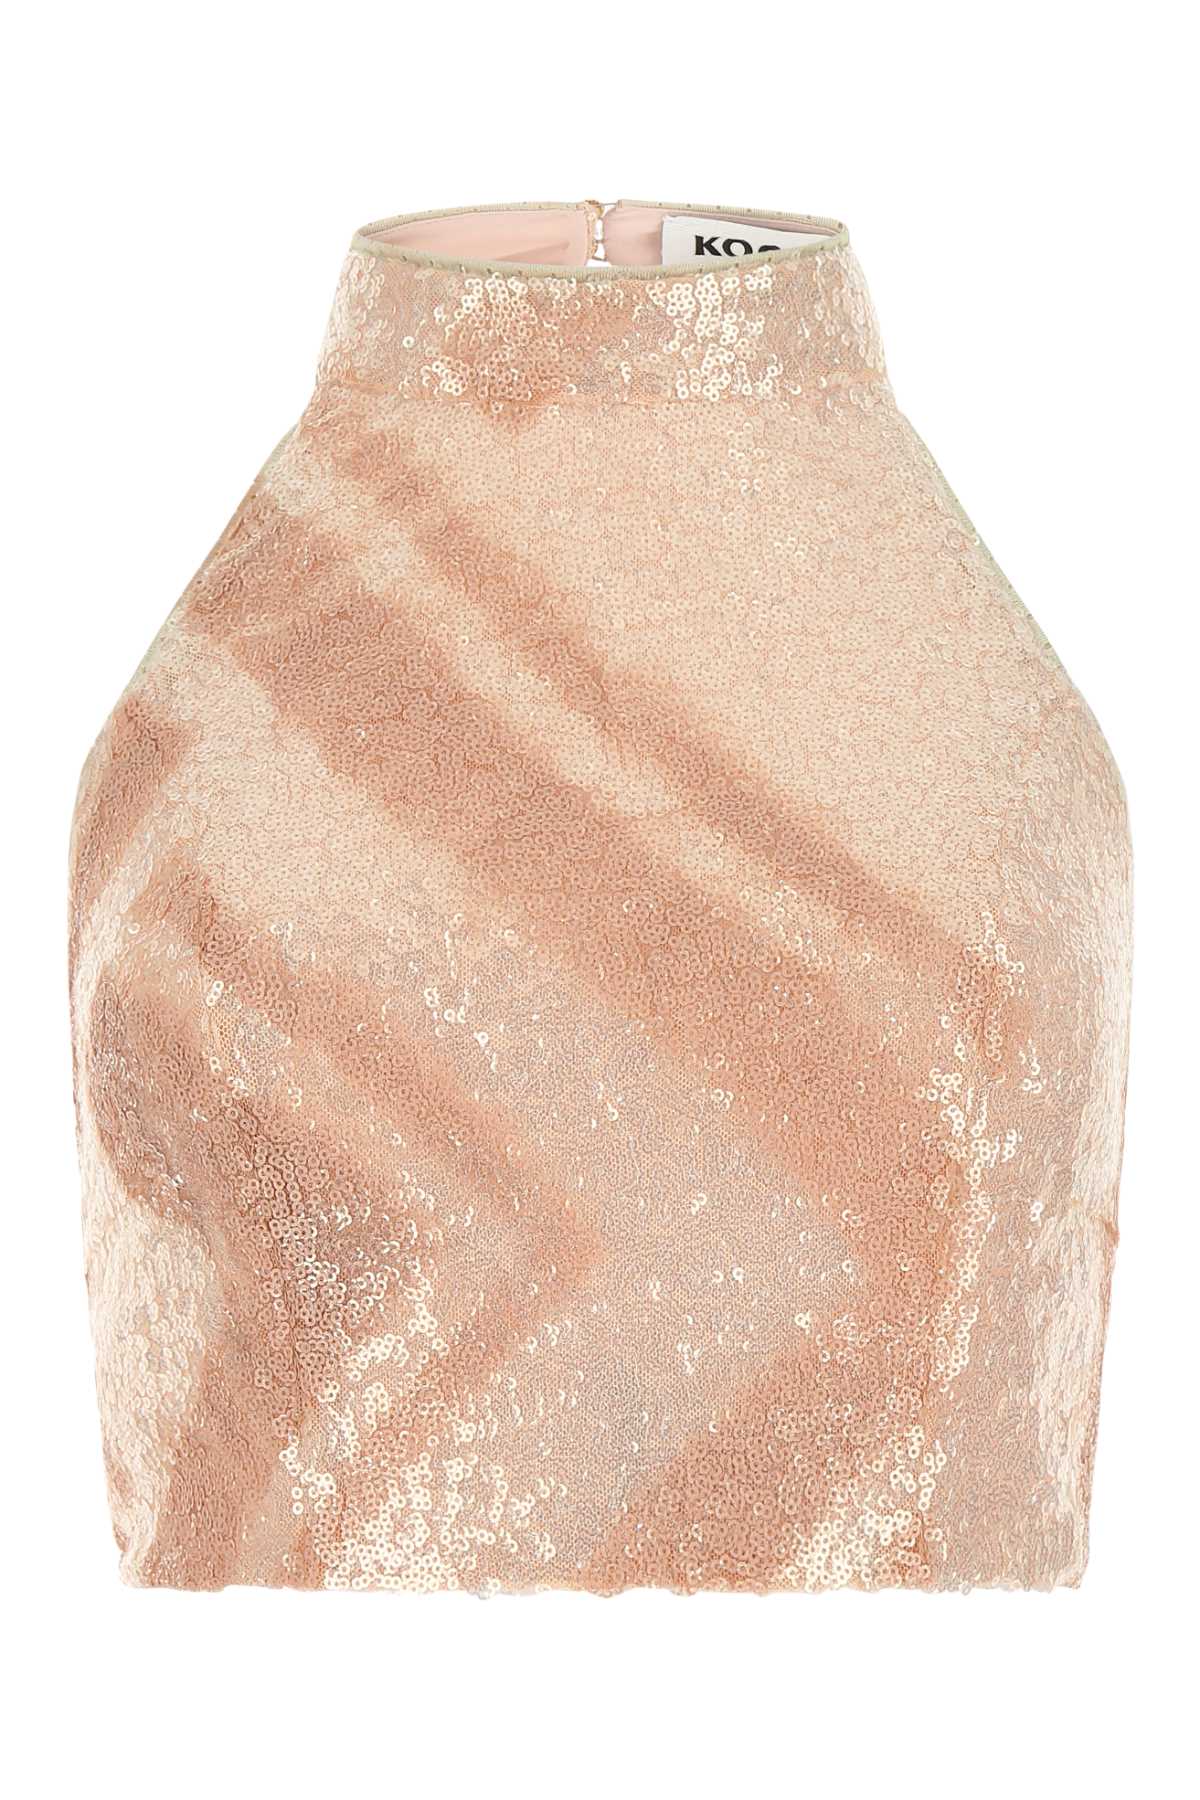 Koché Powder Pink Sequins Top In 215